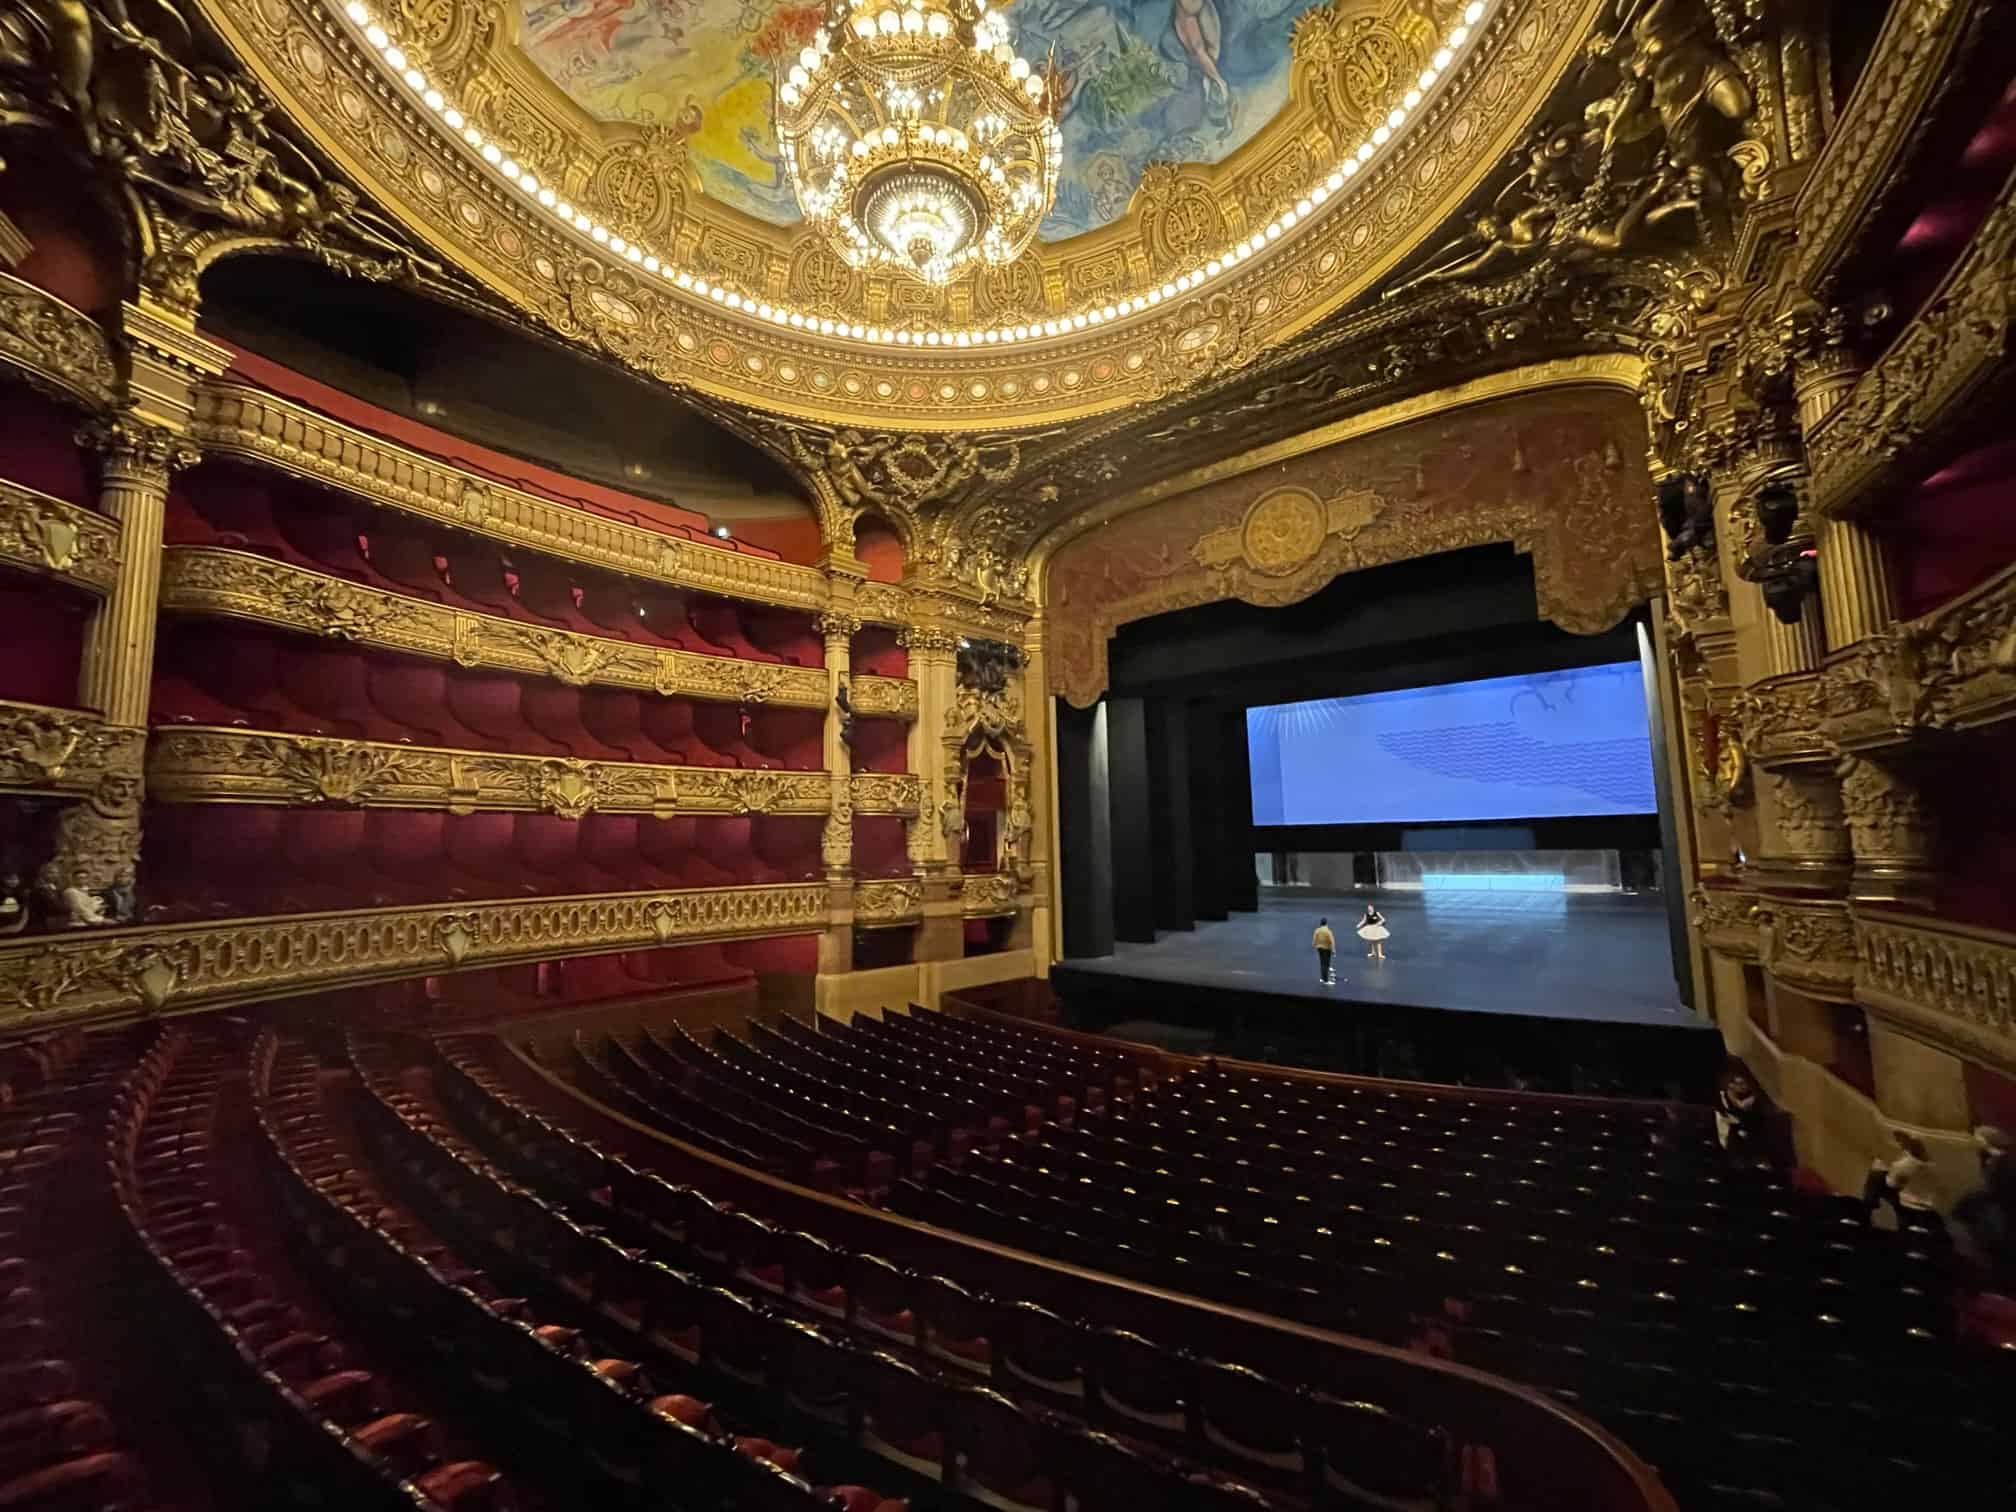 The magnificent Paris Opera House